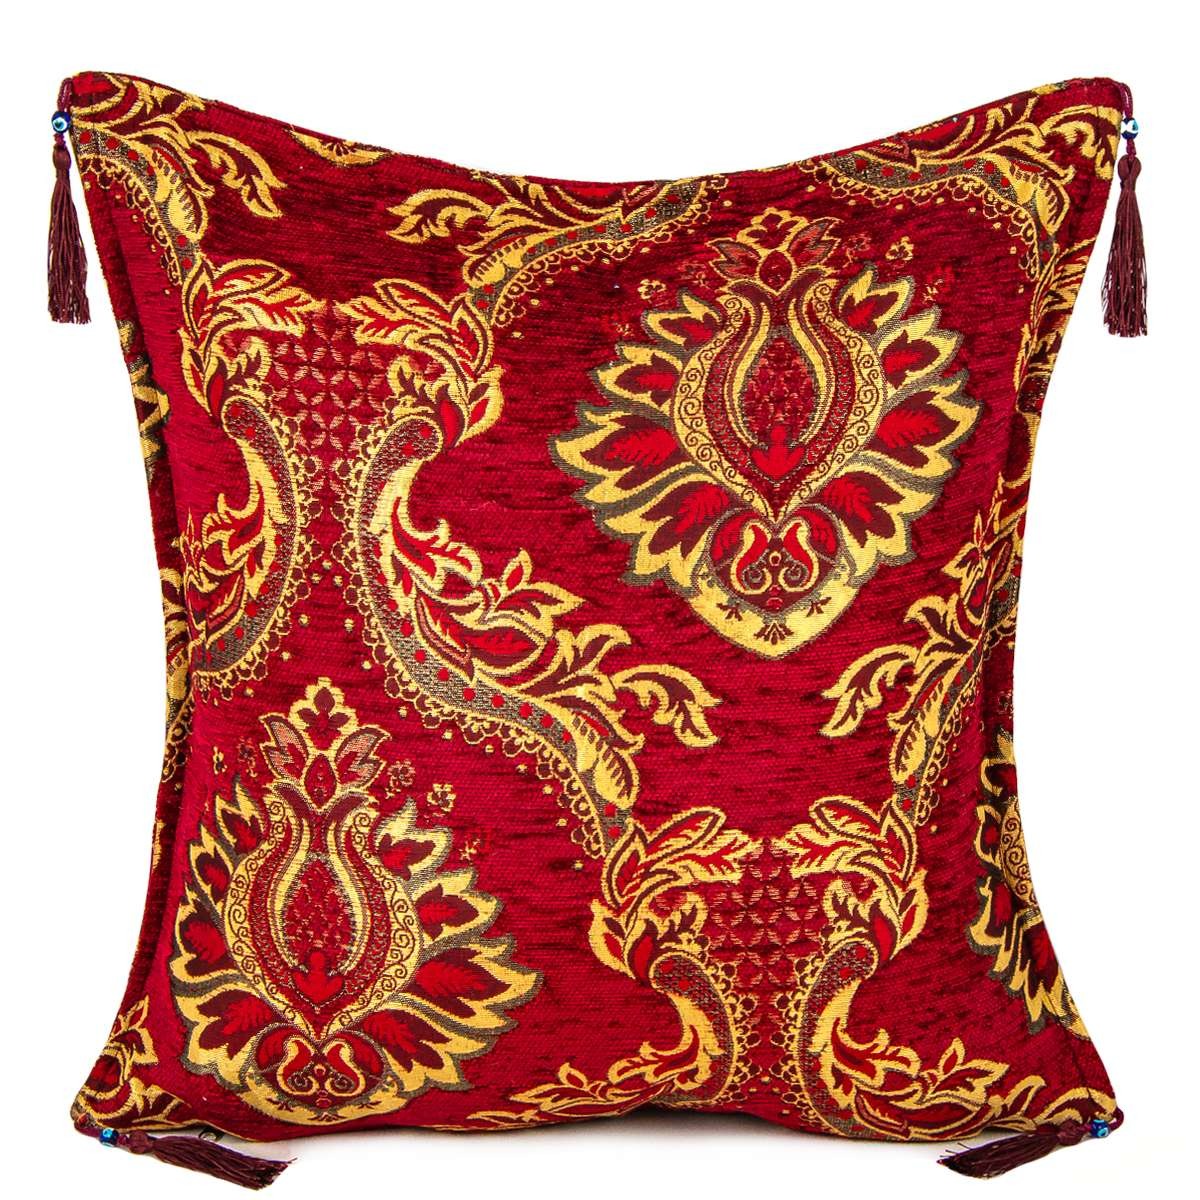 Turkish handmade pillow, Vintage style pillow pair, Retro ottoman style (Buy 1 Get 1 Free)